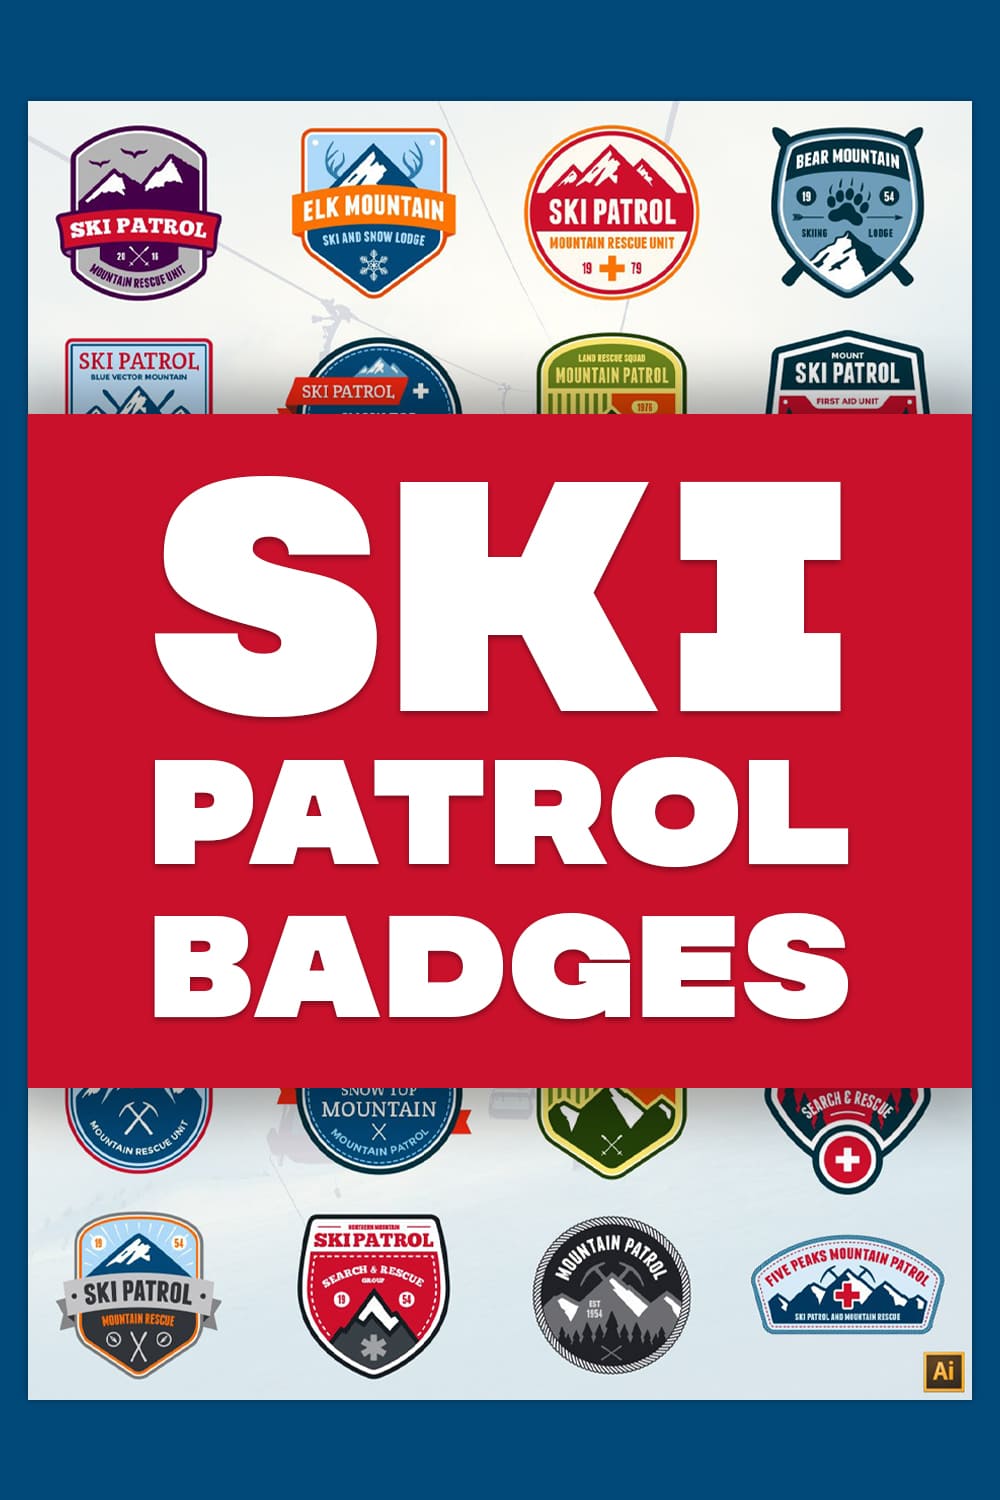 Ski Patrol Badges Pinterest image.